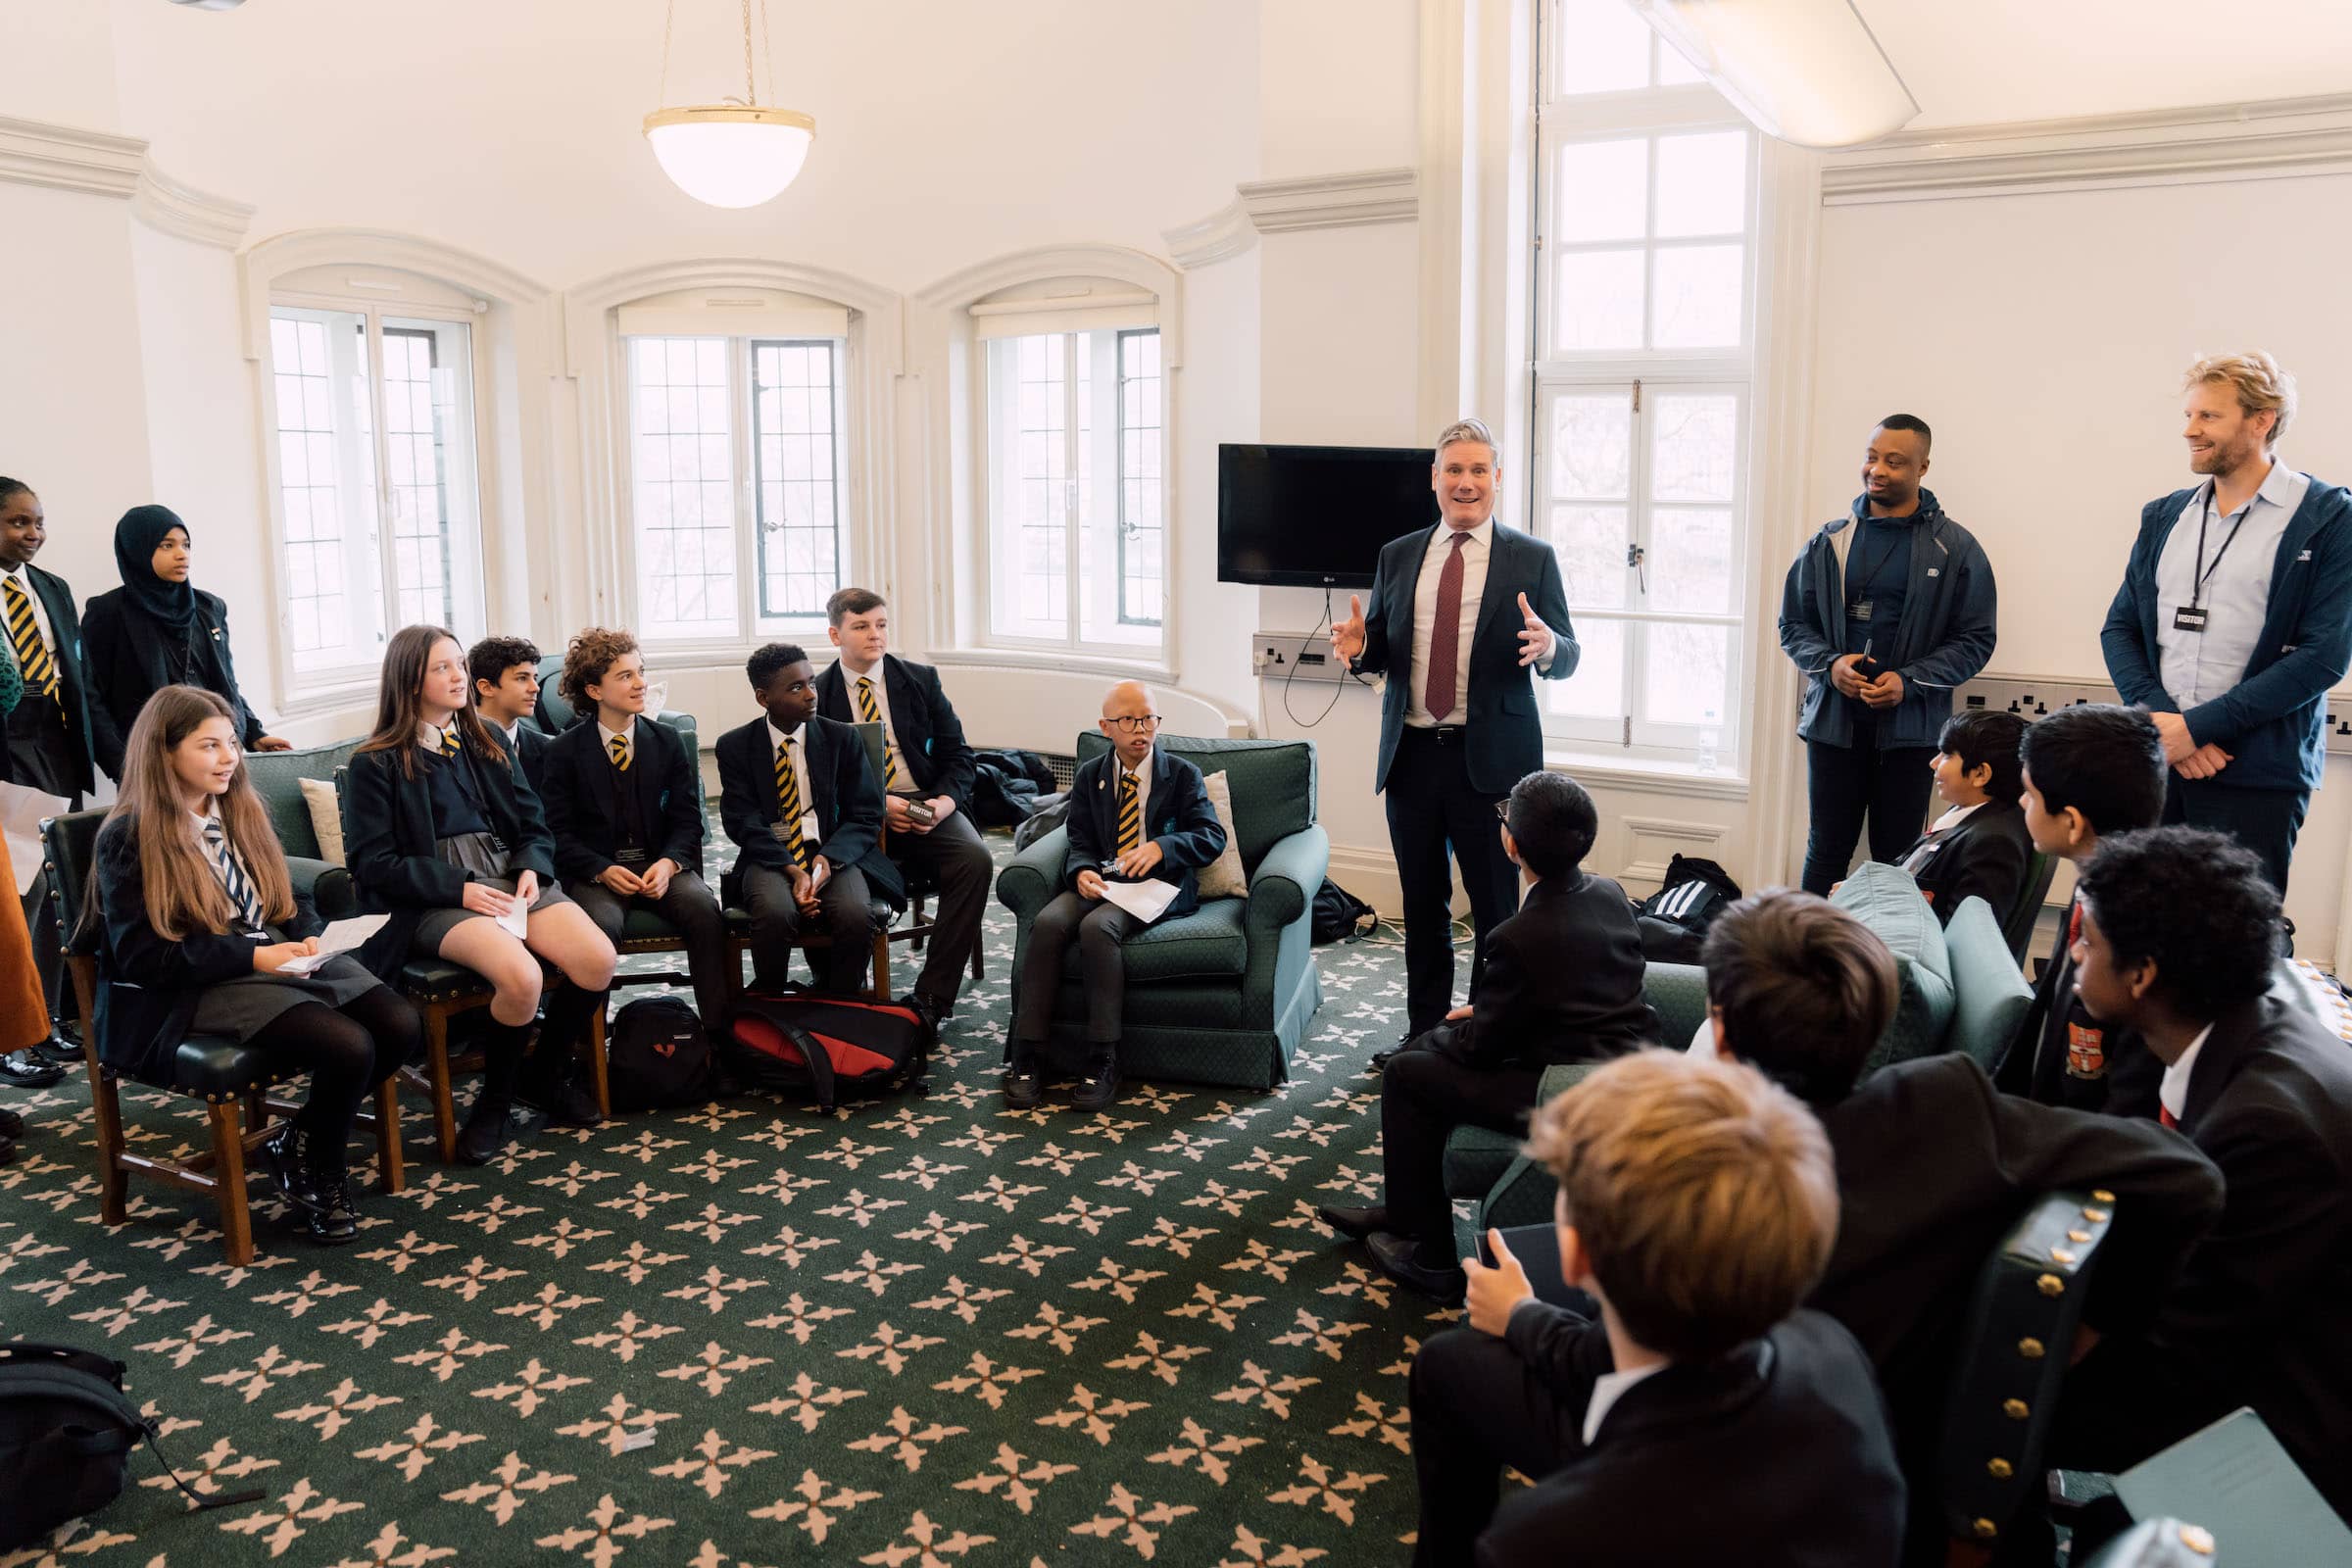 Sir keir starmer welcomes london schoolchildren for pmqs